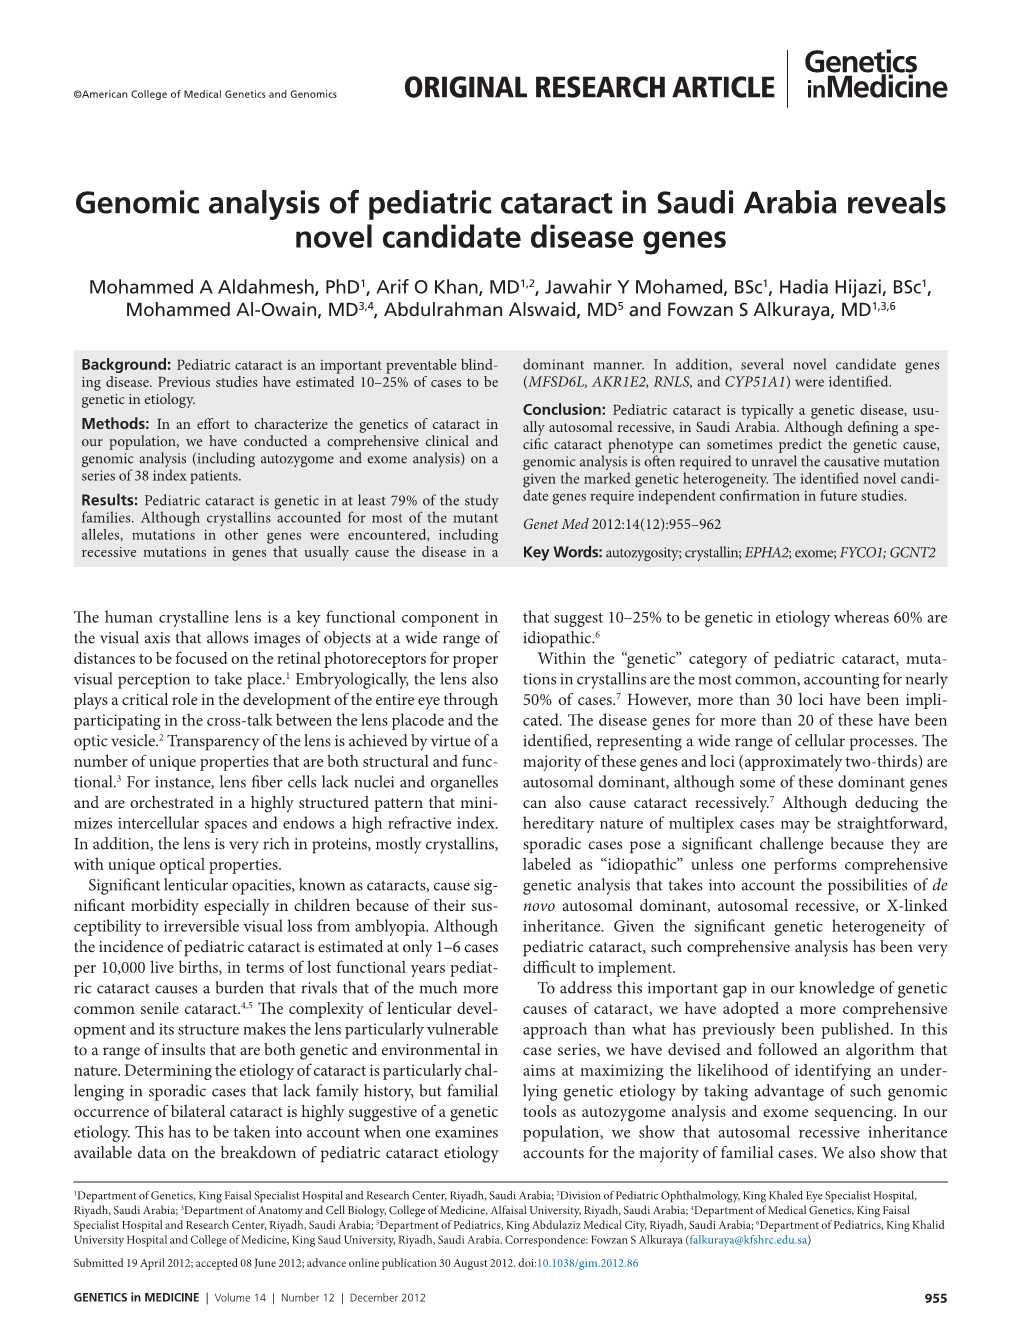 Genomic Analysis of Pediatric Cataract in Saudi Arabia Reveals Novel Candidate Disease Genes